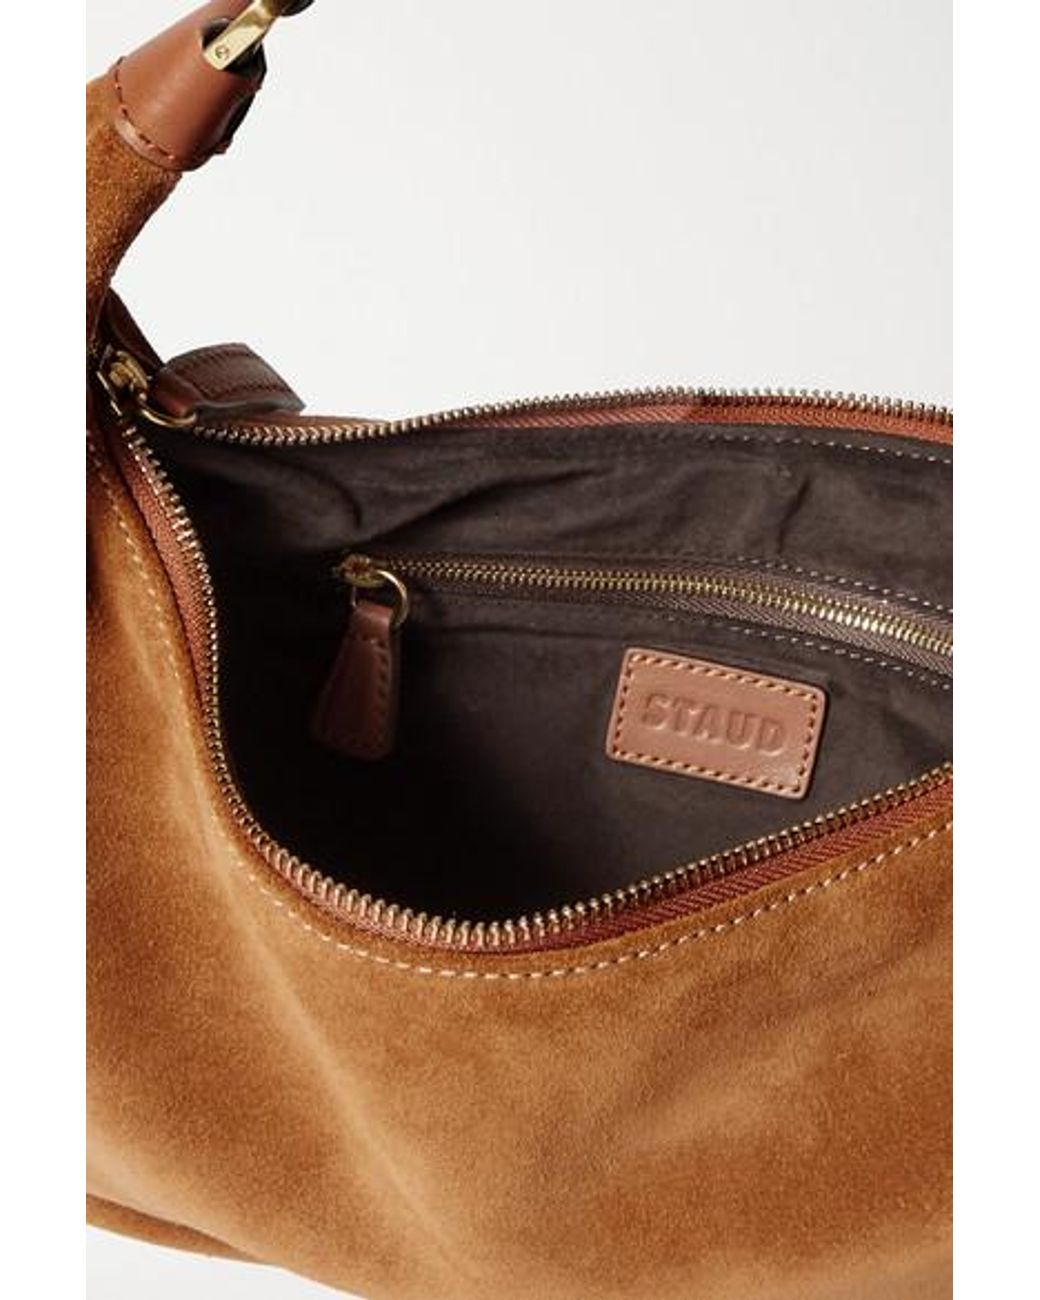 STAUD Sasha Tweed Shoulder Bag  16 Bags We Really Love on Sale